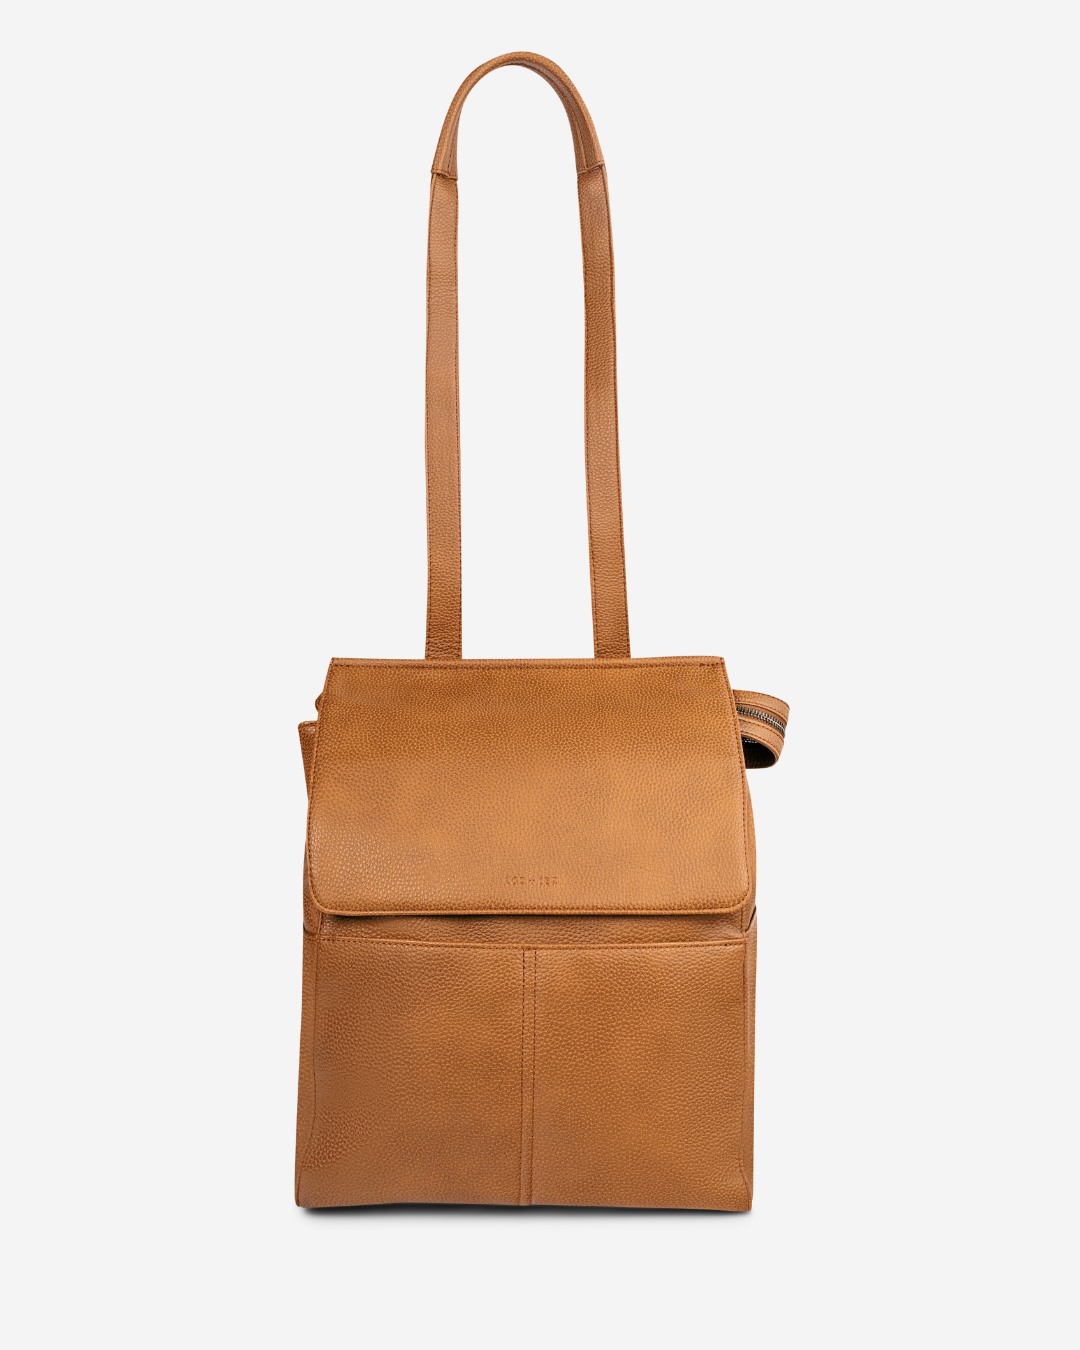 stylish camera bag backpack tan front view